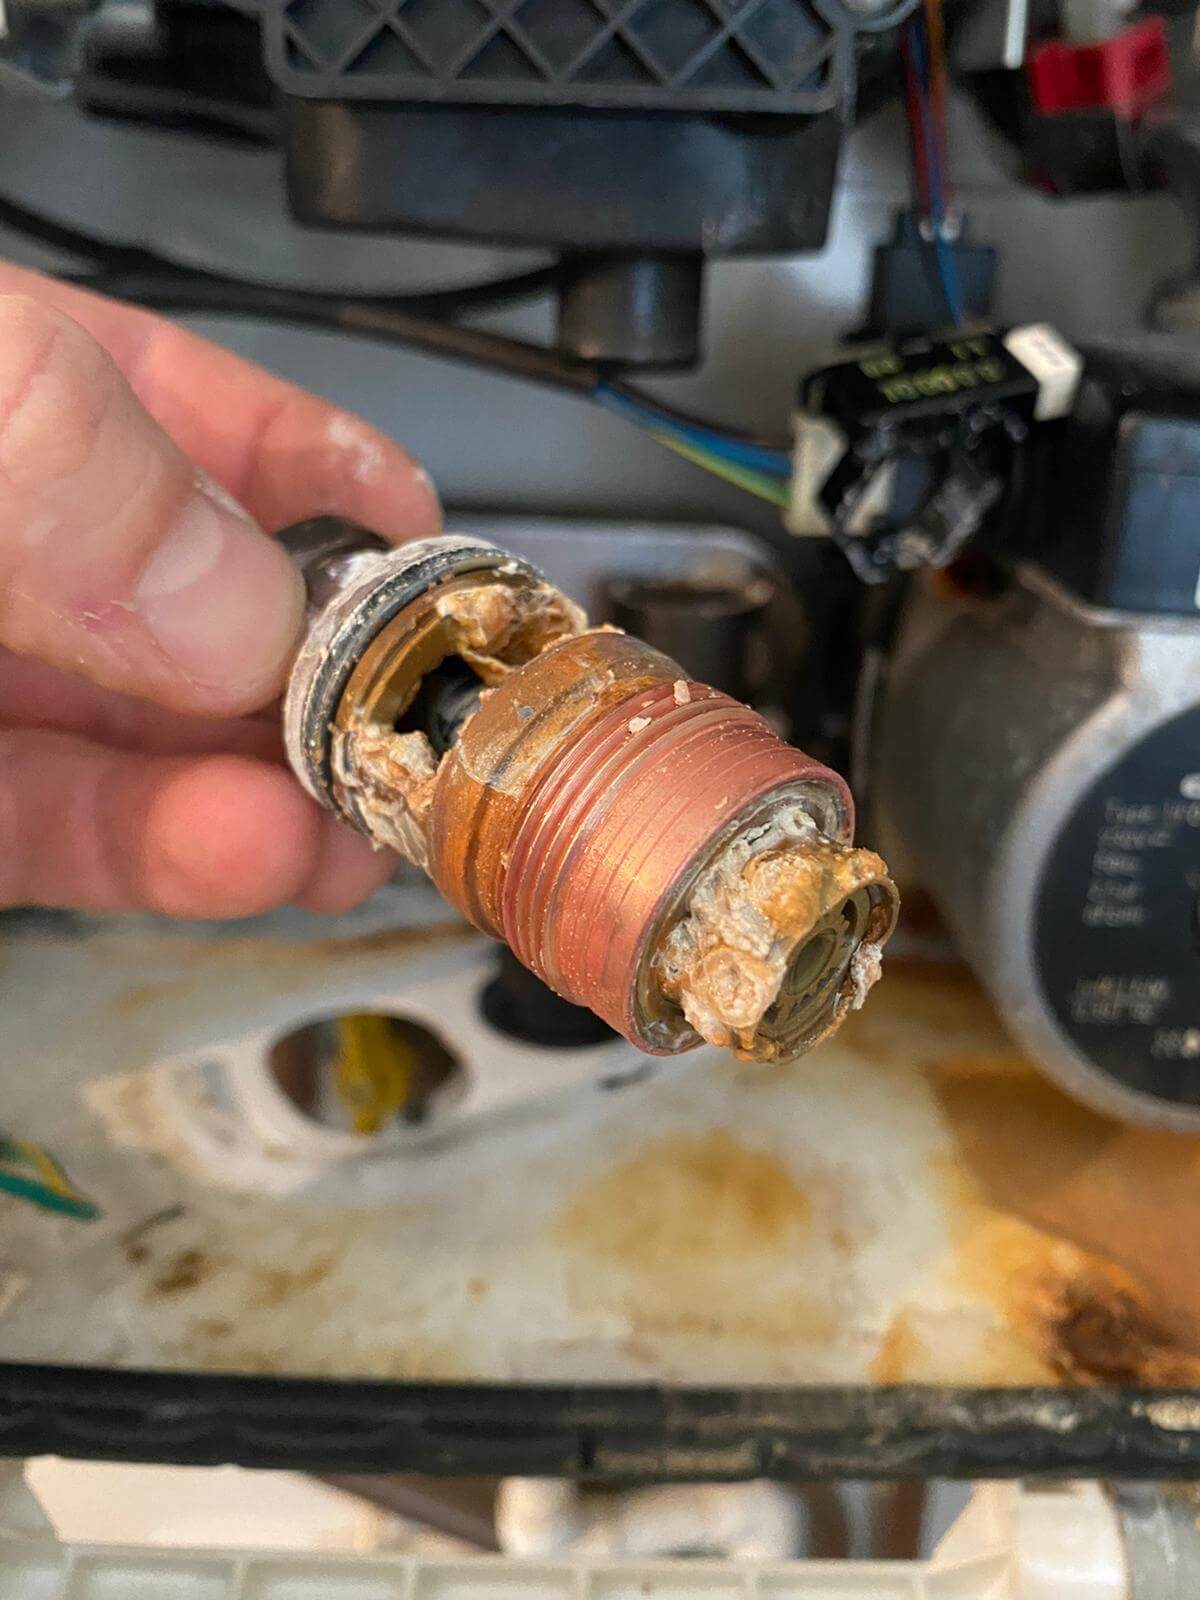 replacing a damaged hall sensor on a boiler